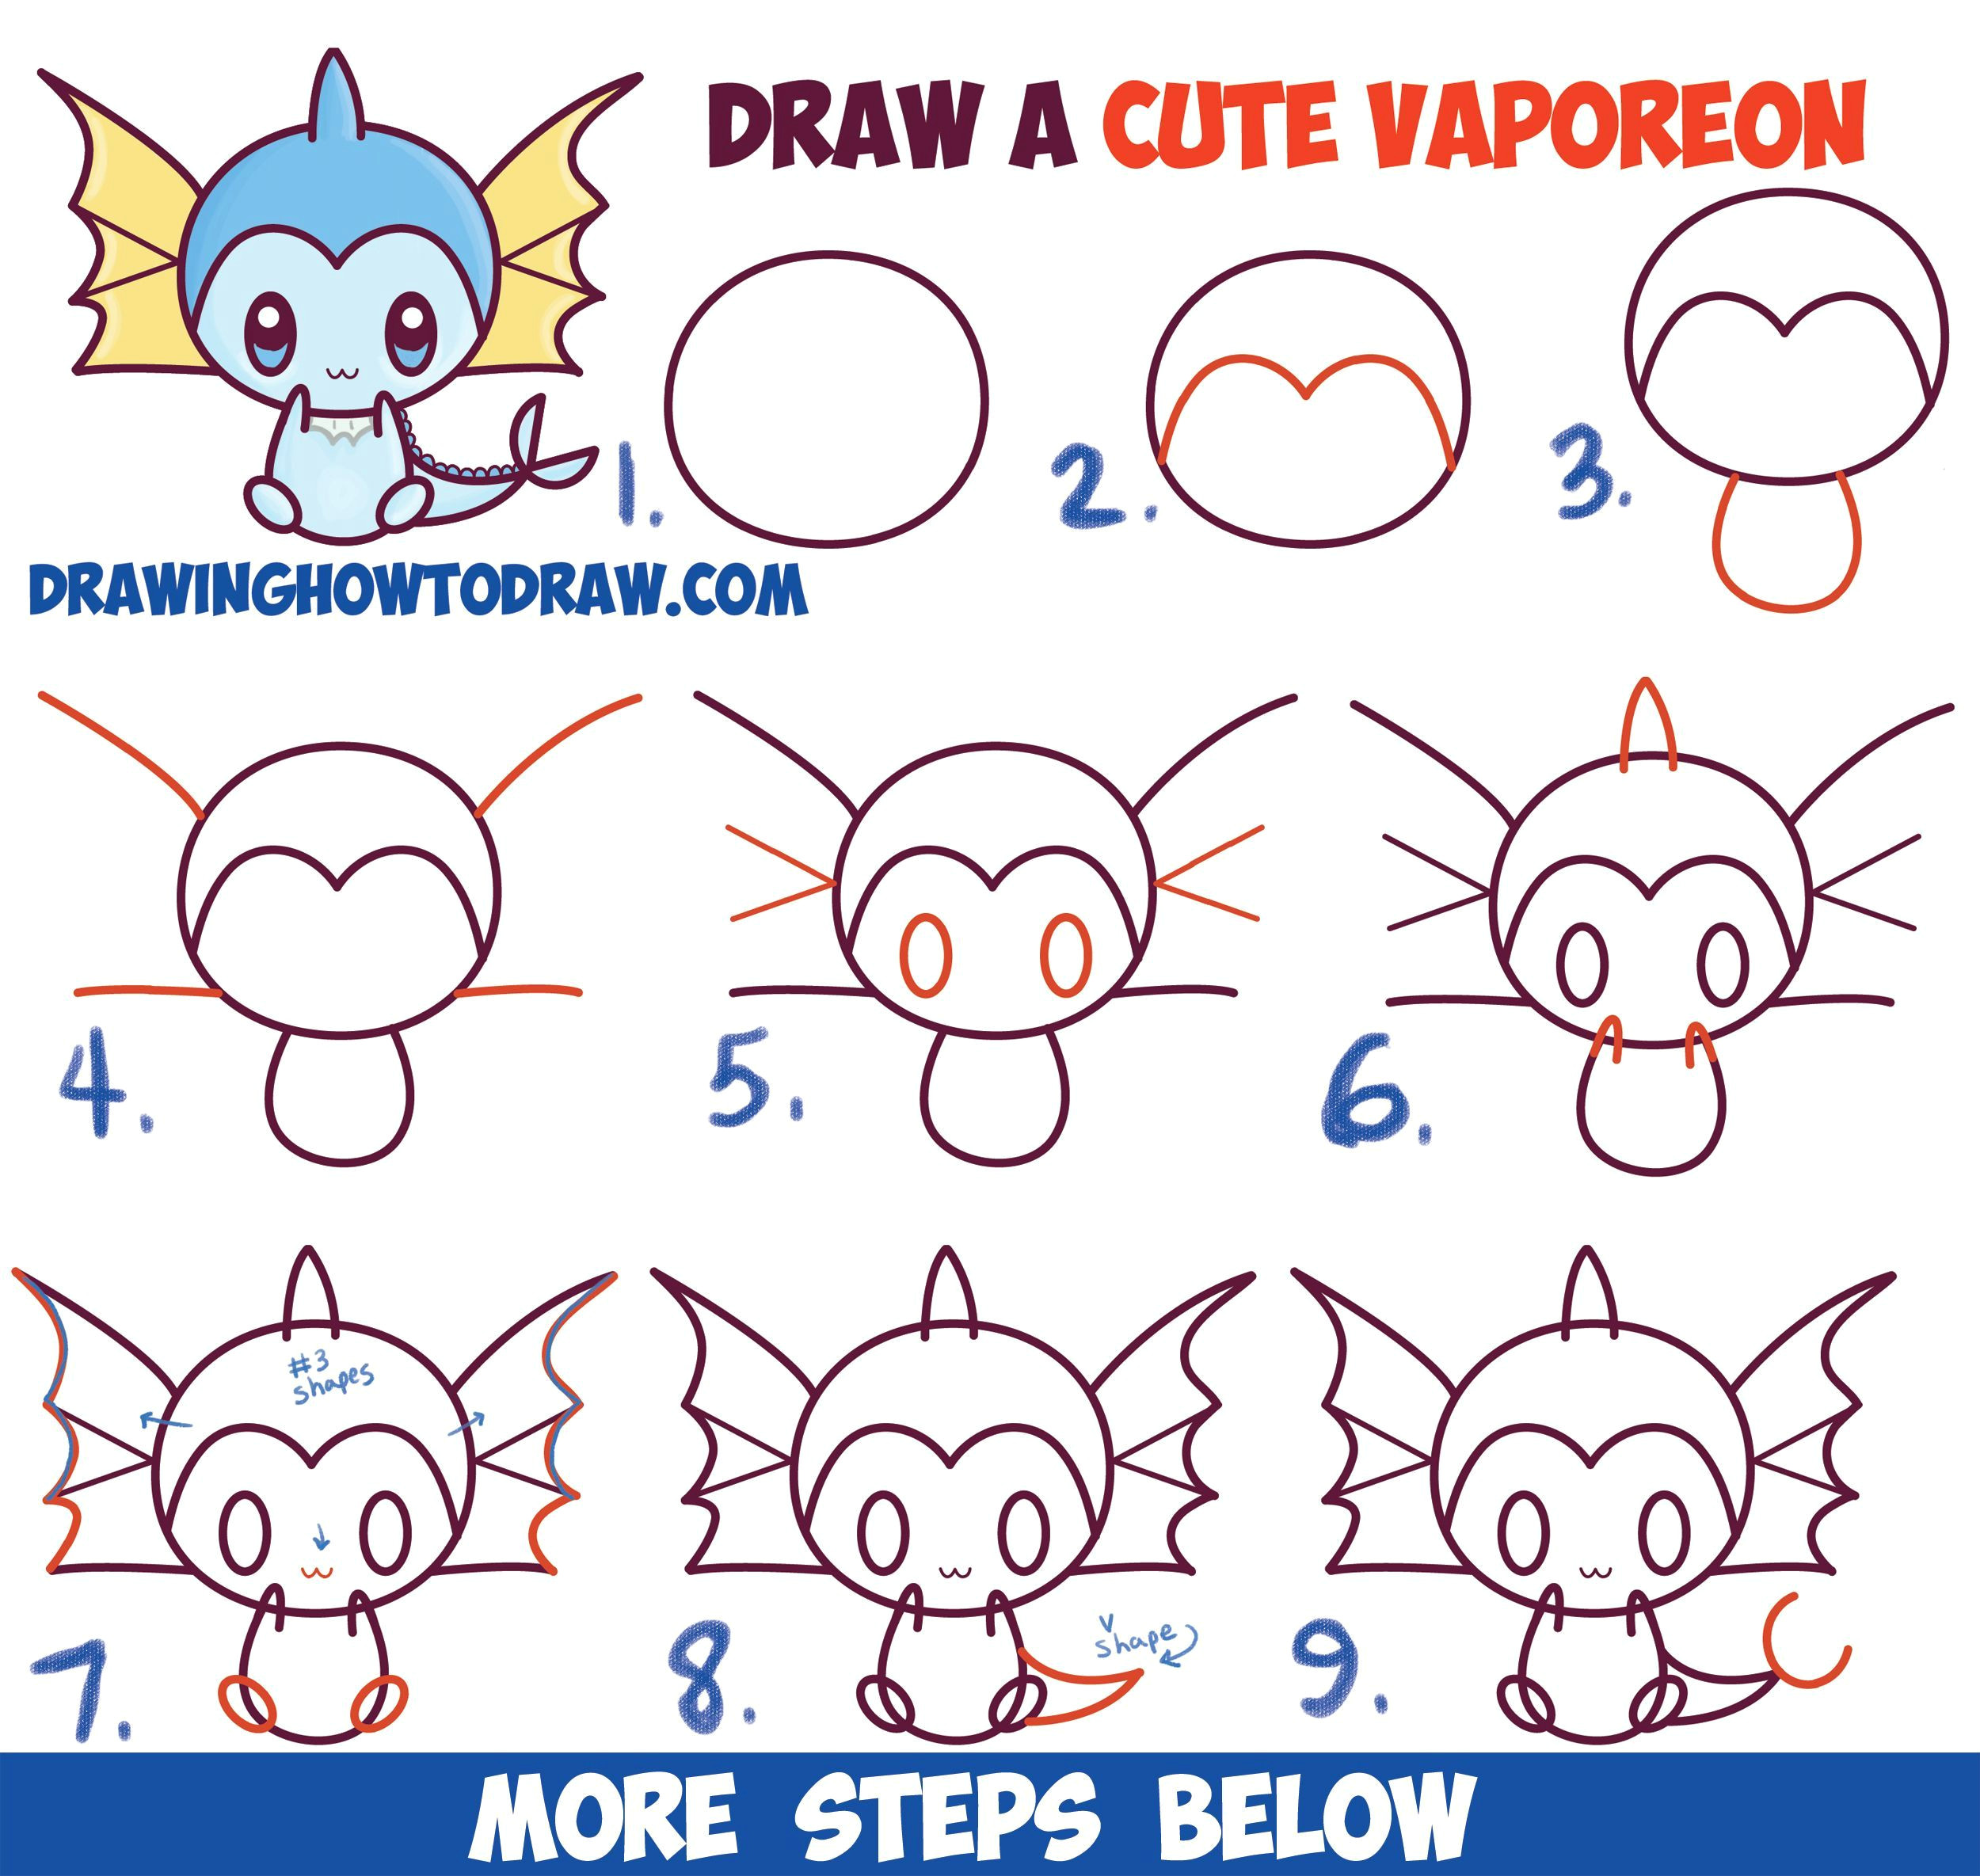 Charmander Drawing Easy How to Draw Cute Kawaii Chibi Vaporeon From Pokemon Easy